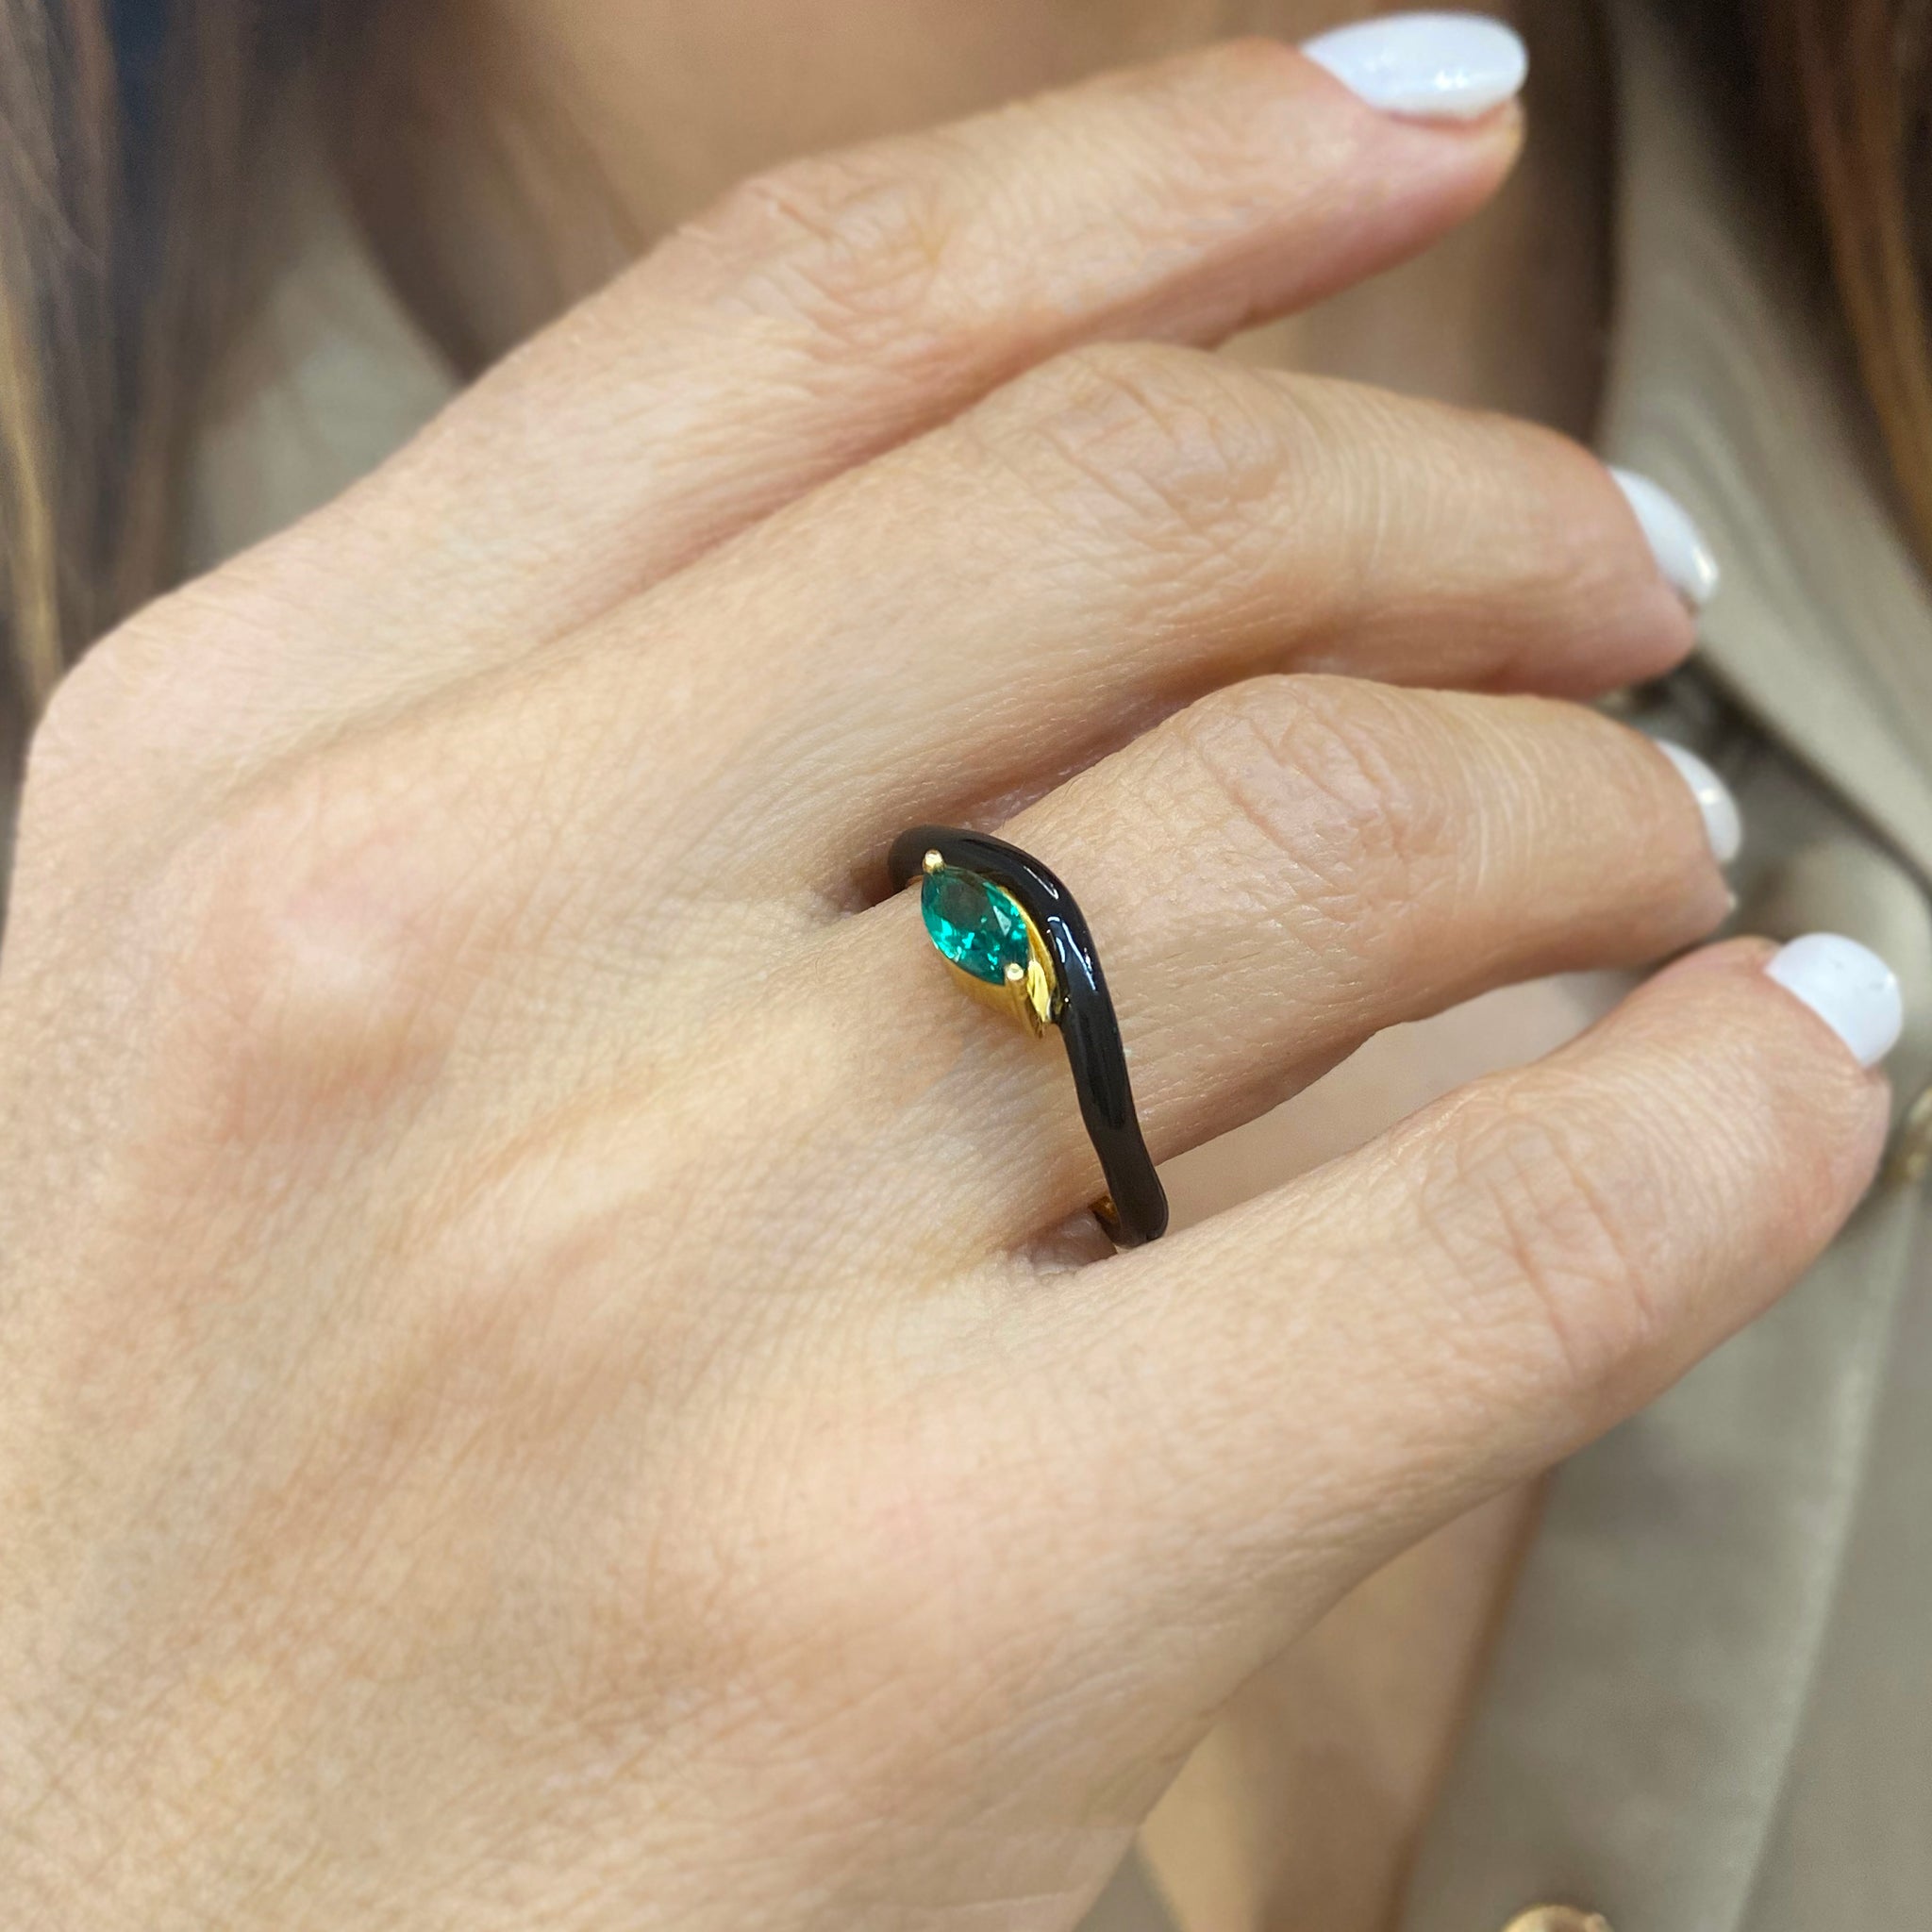 Green Emerald zircon stone ring with handpainted black Enamel. Adjustable Silver 925 ring